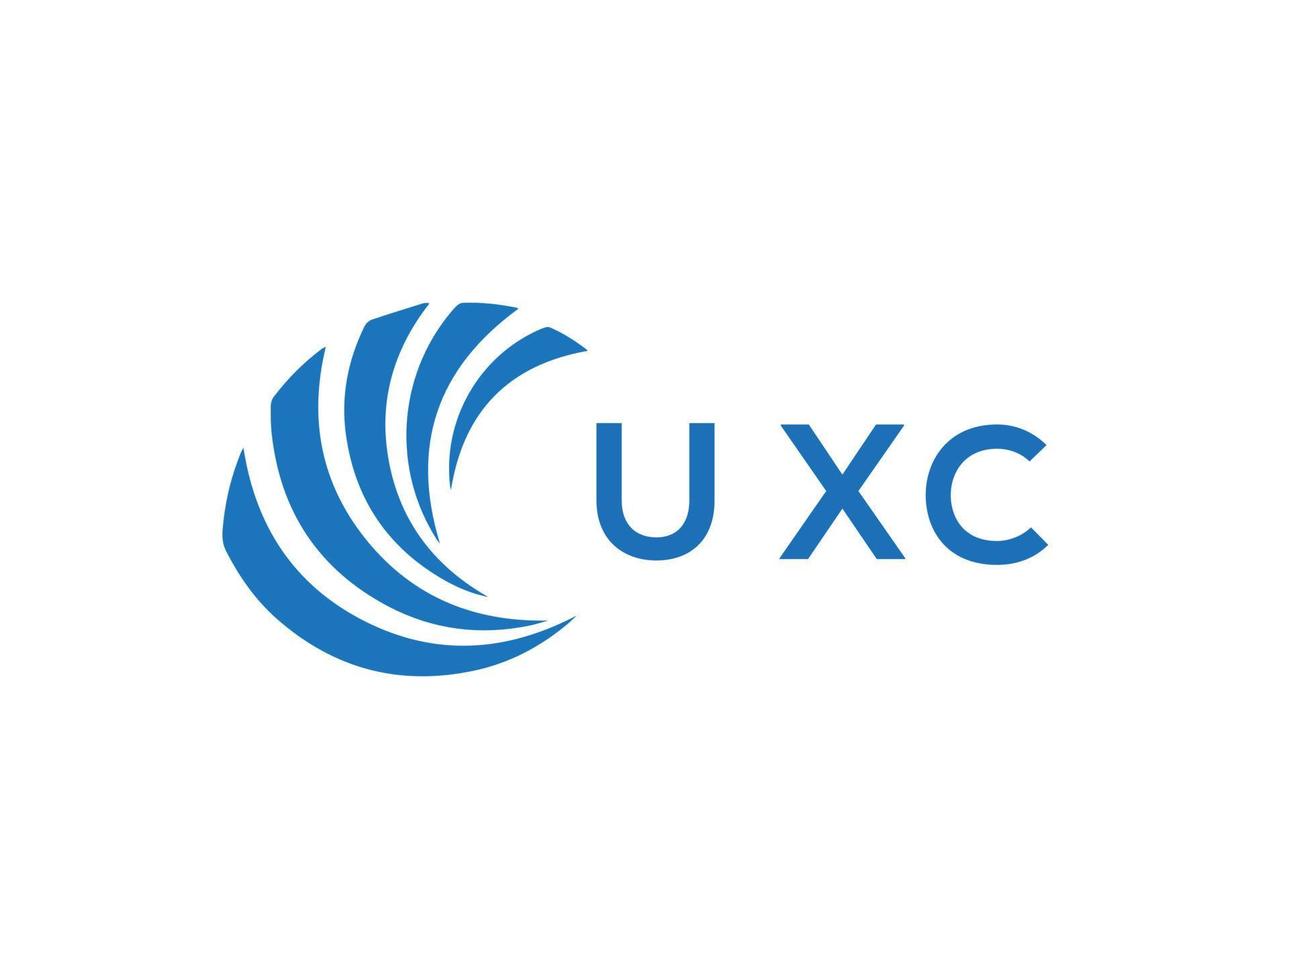 uxc lettera logo design su bianca sfondo. uxc creativo cerchio lettera logo concetto. uxc lettera design. vettore